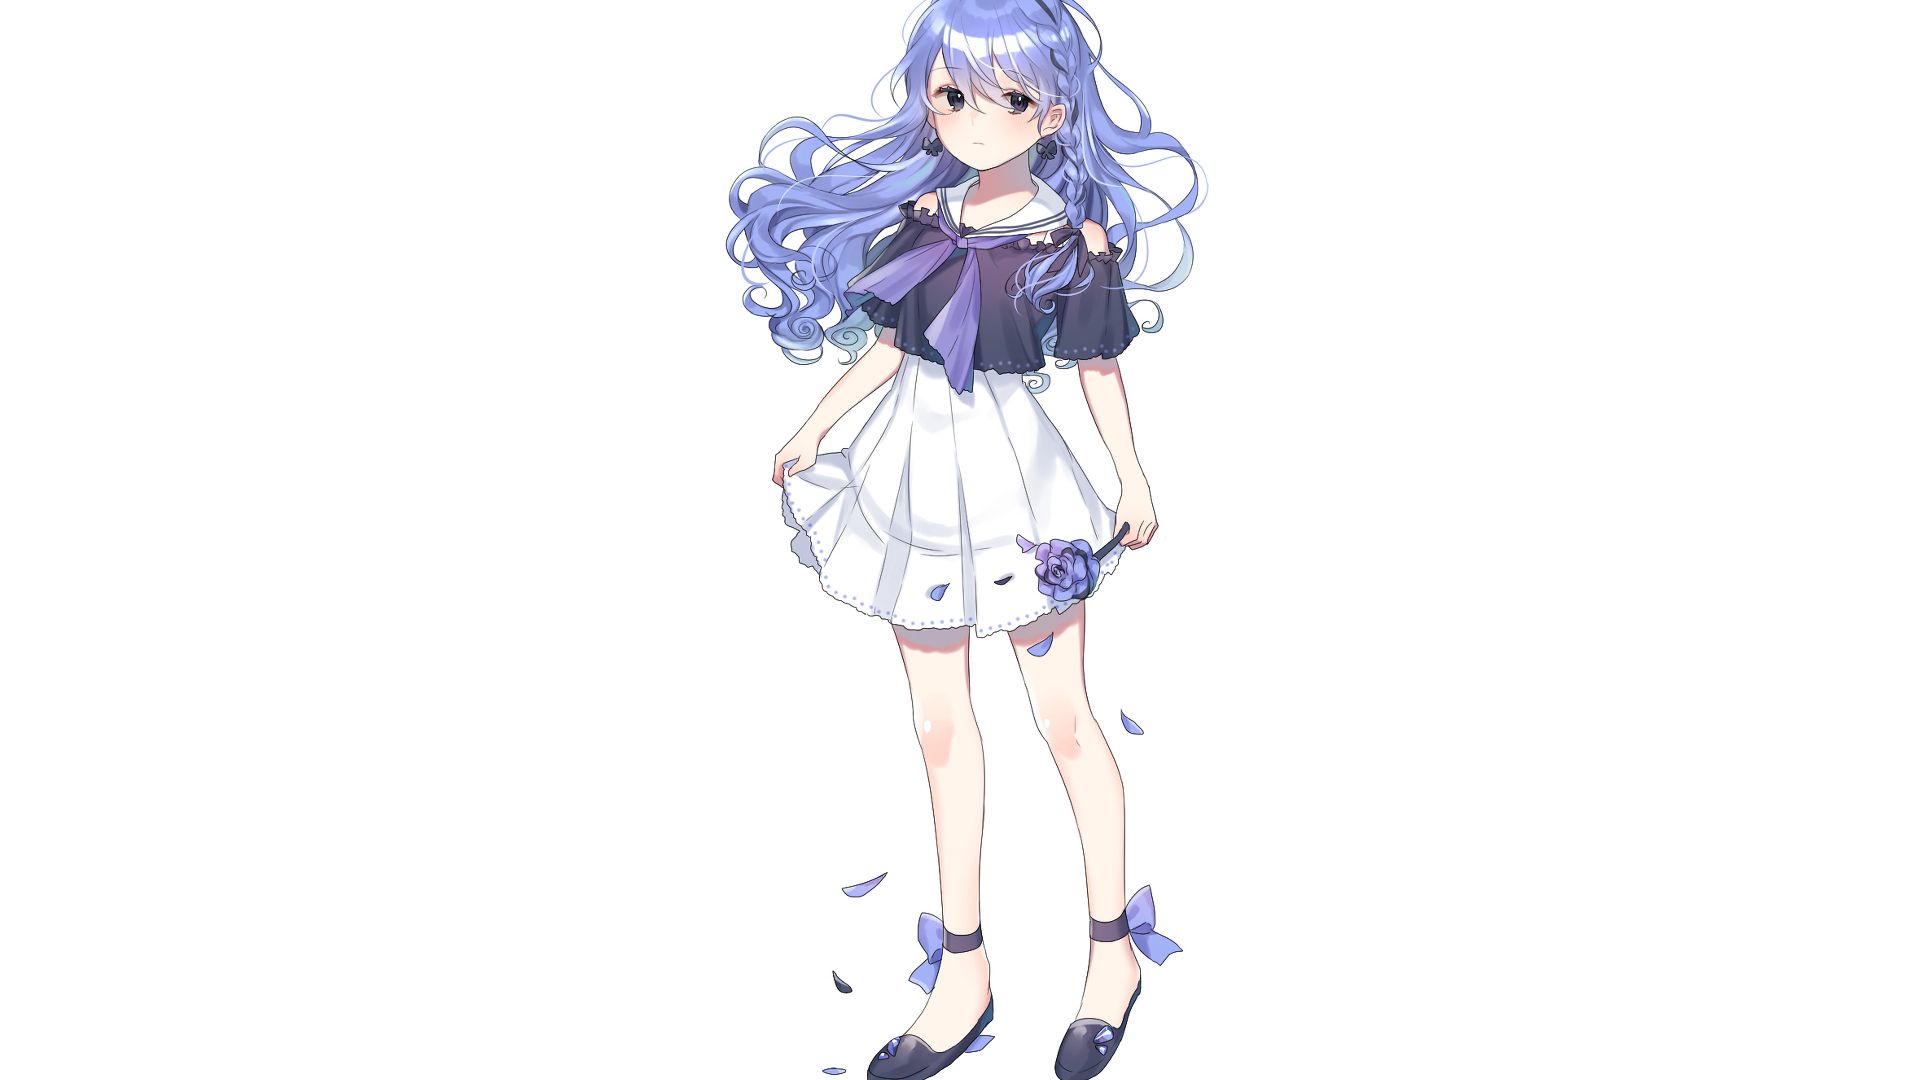 Wallpaper Original, minimal, Short dress, cute anime girl, purple hair